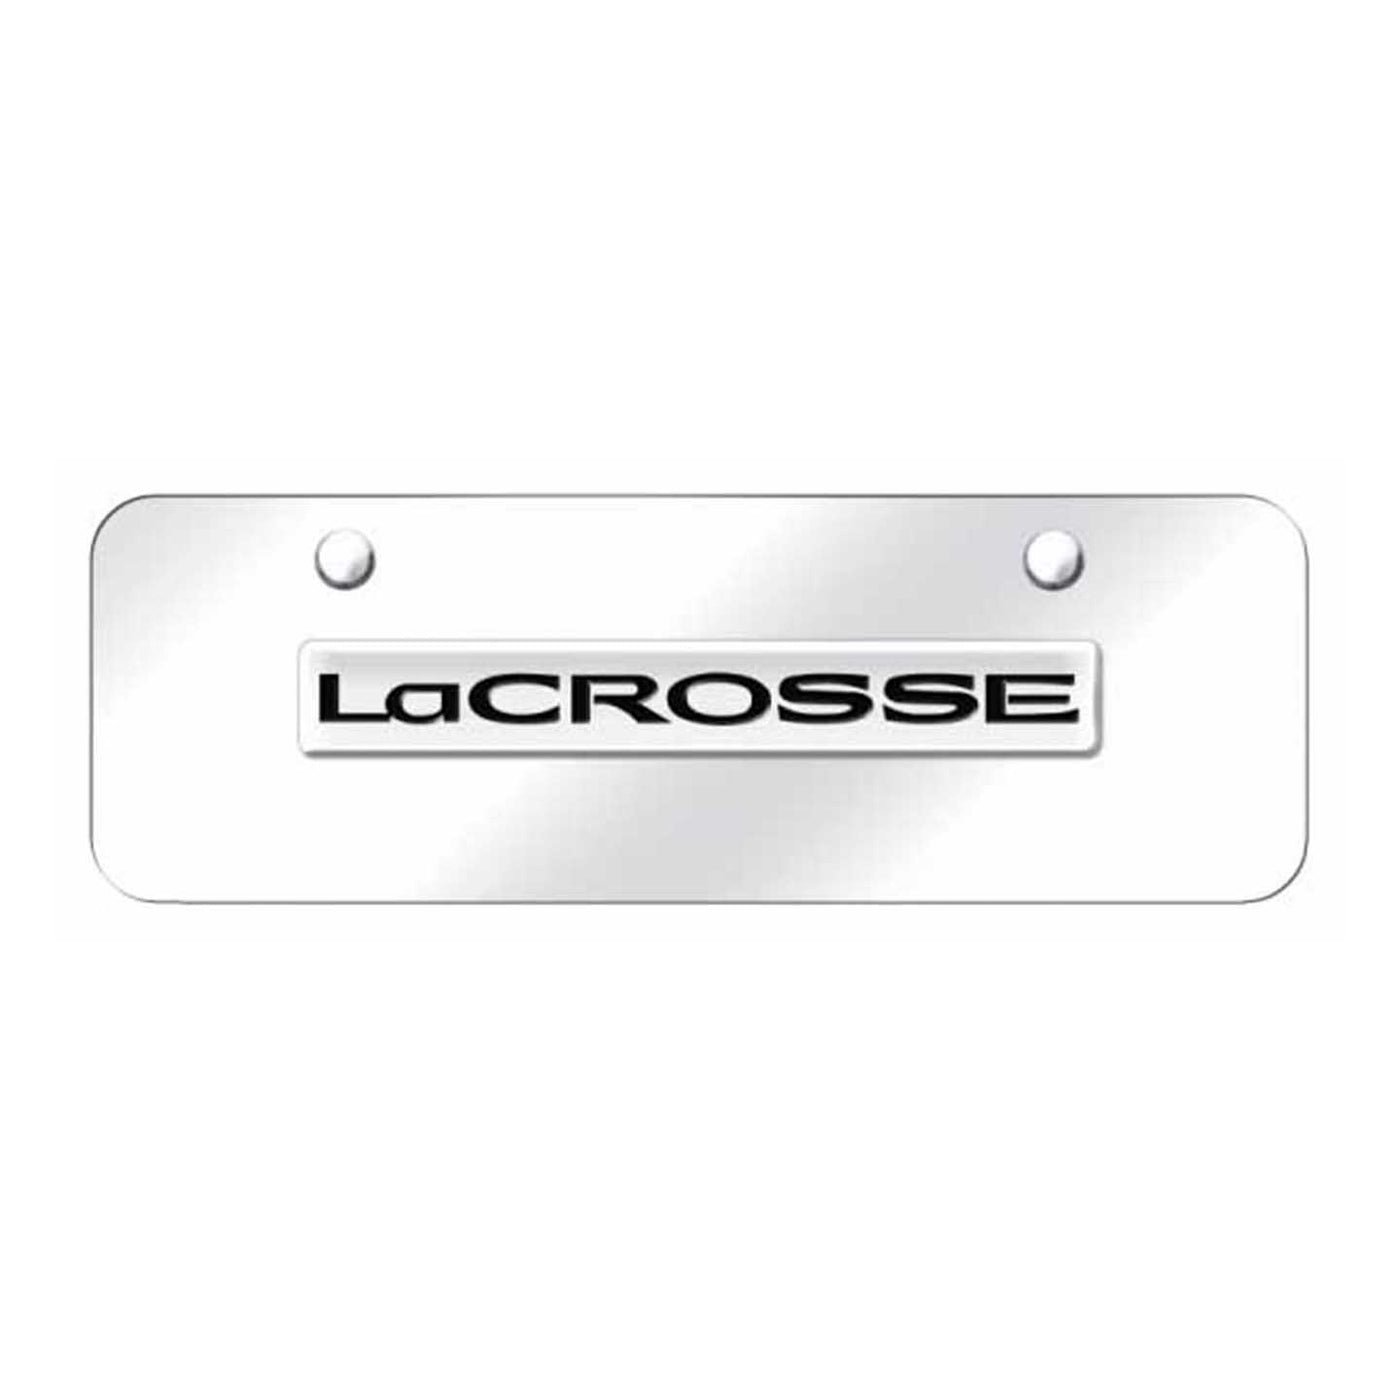 LaCrosse Name Mini Plate - Chrome on Mirrored